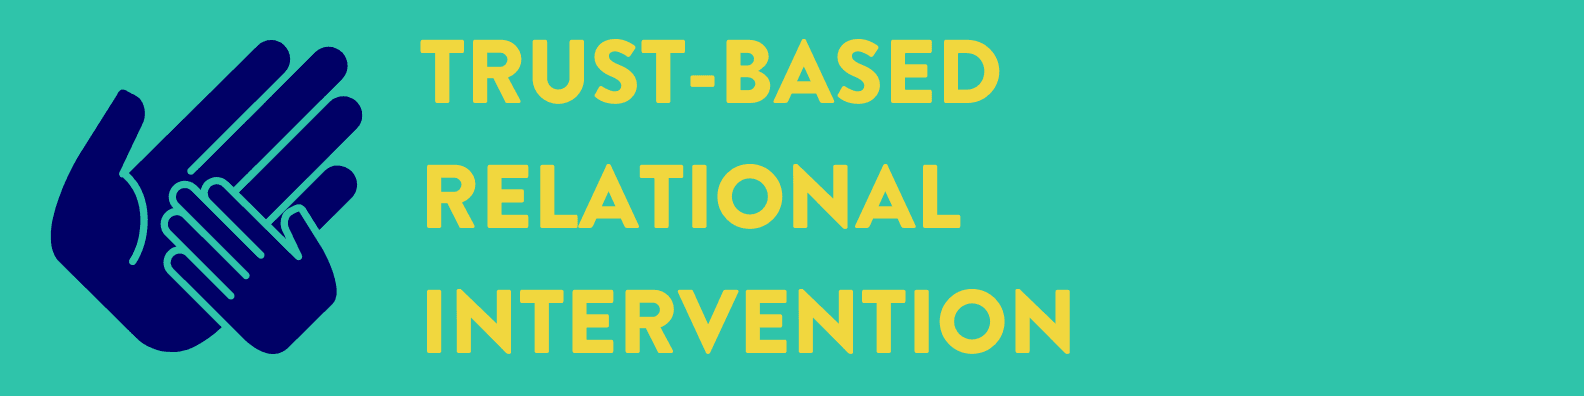 Trust Based Relational Intervention banner